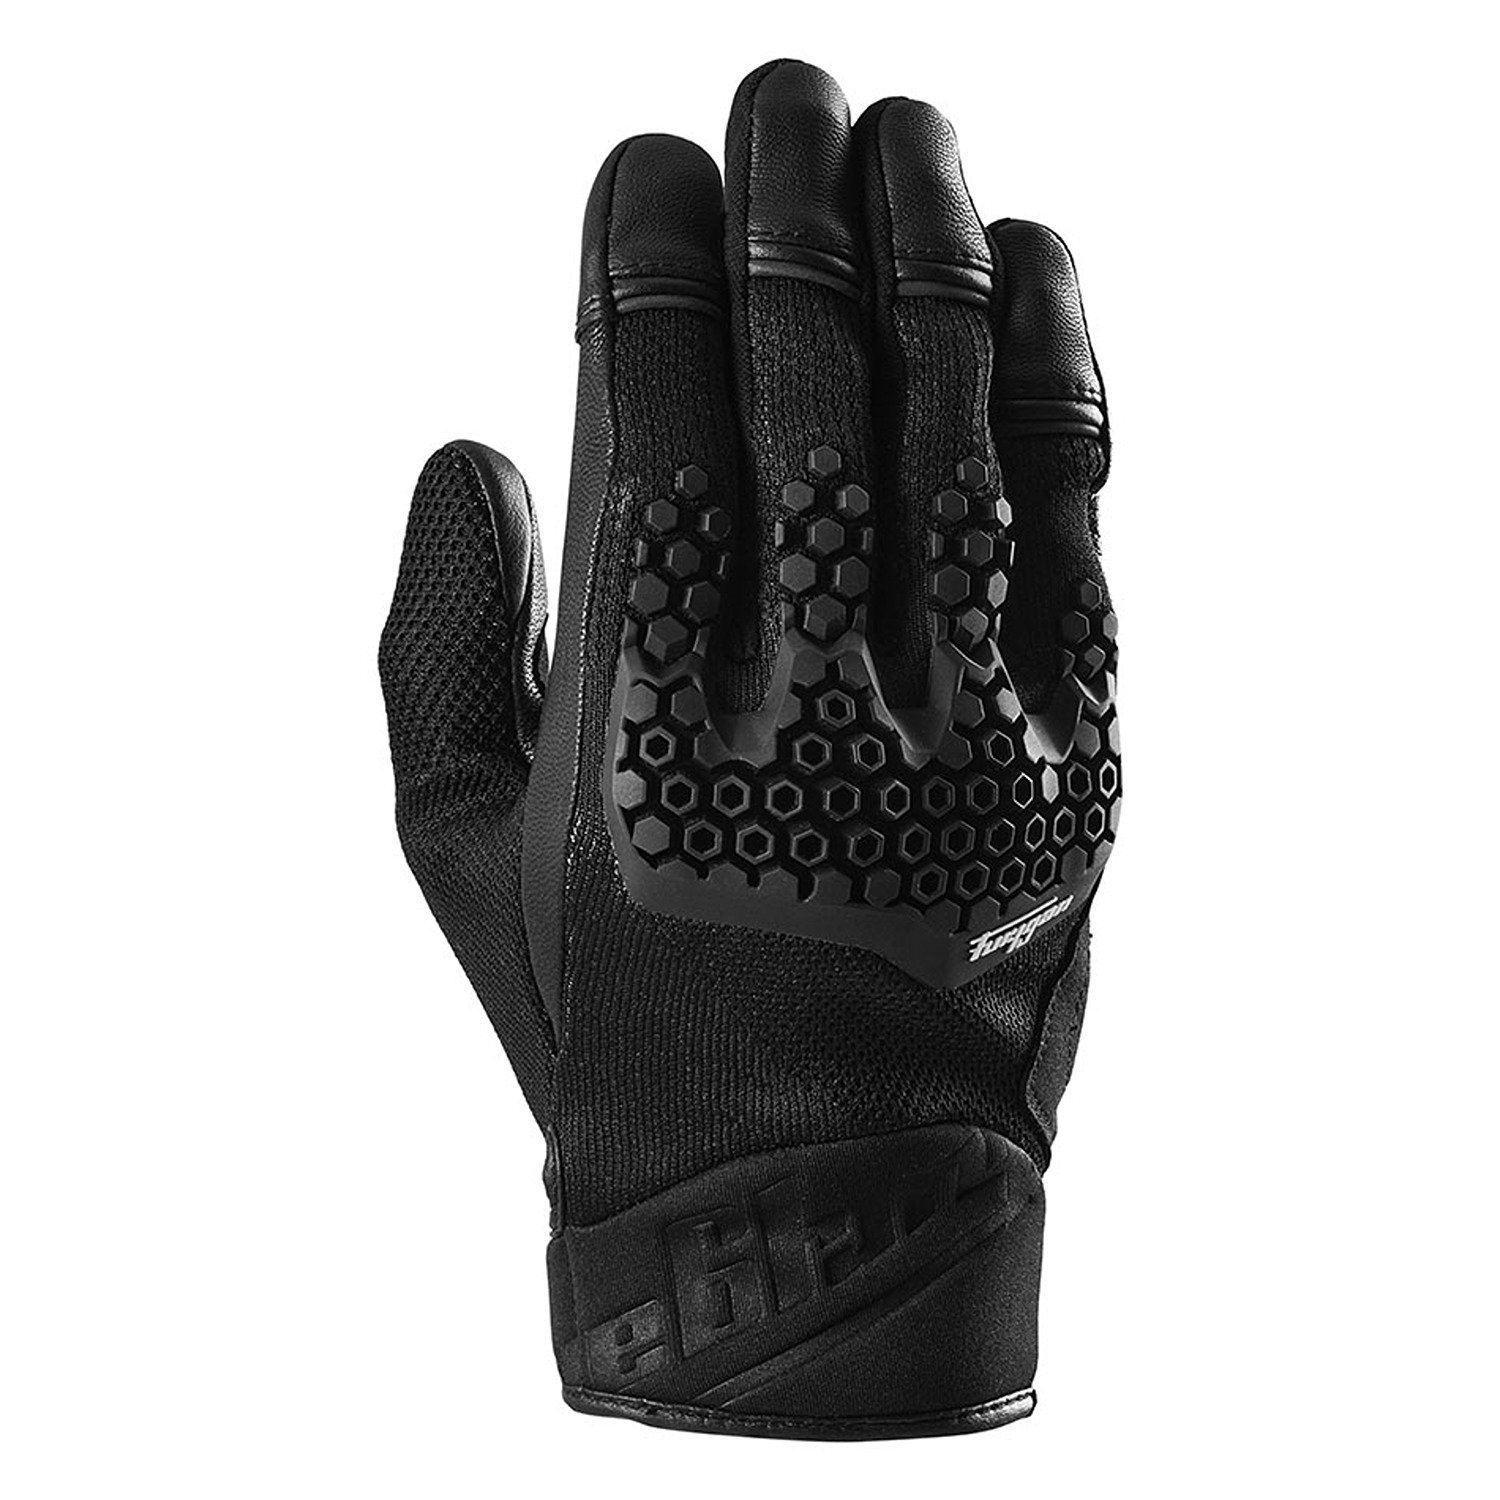 Image of Furygan Jack Gloves Black Size L ID 3435980383558